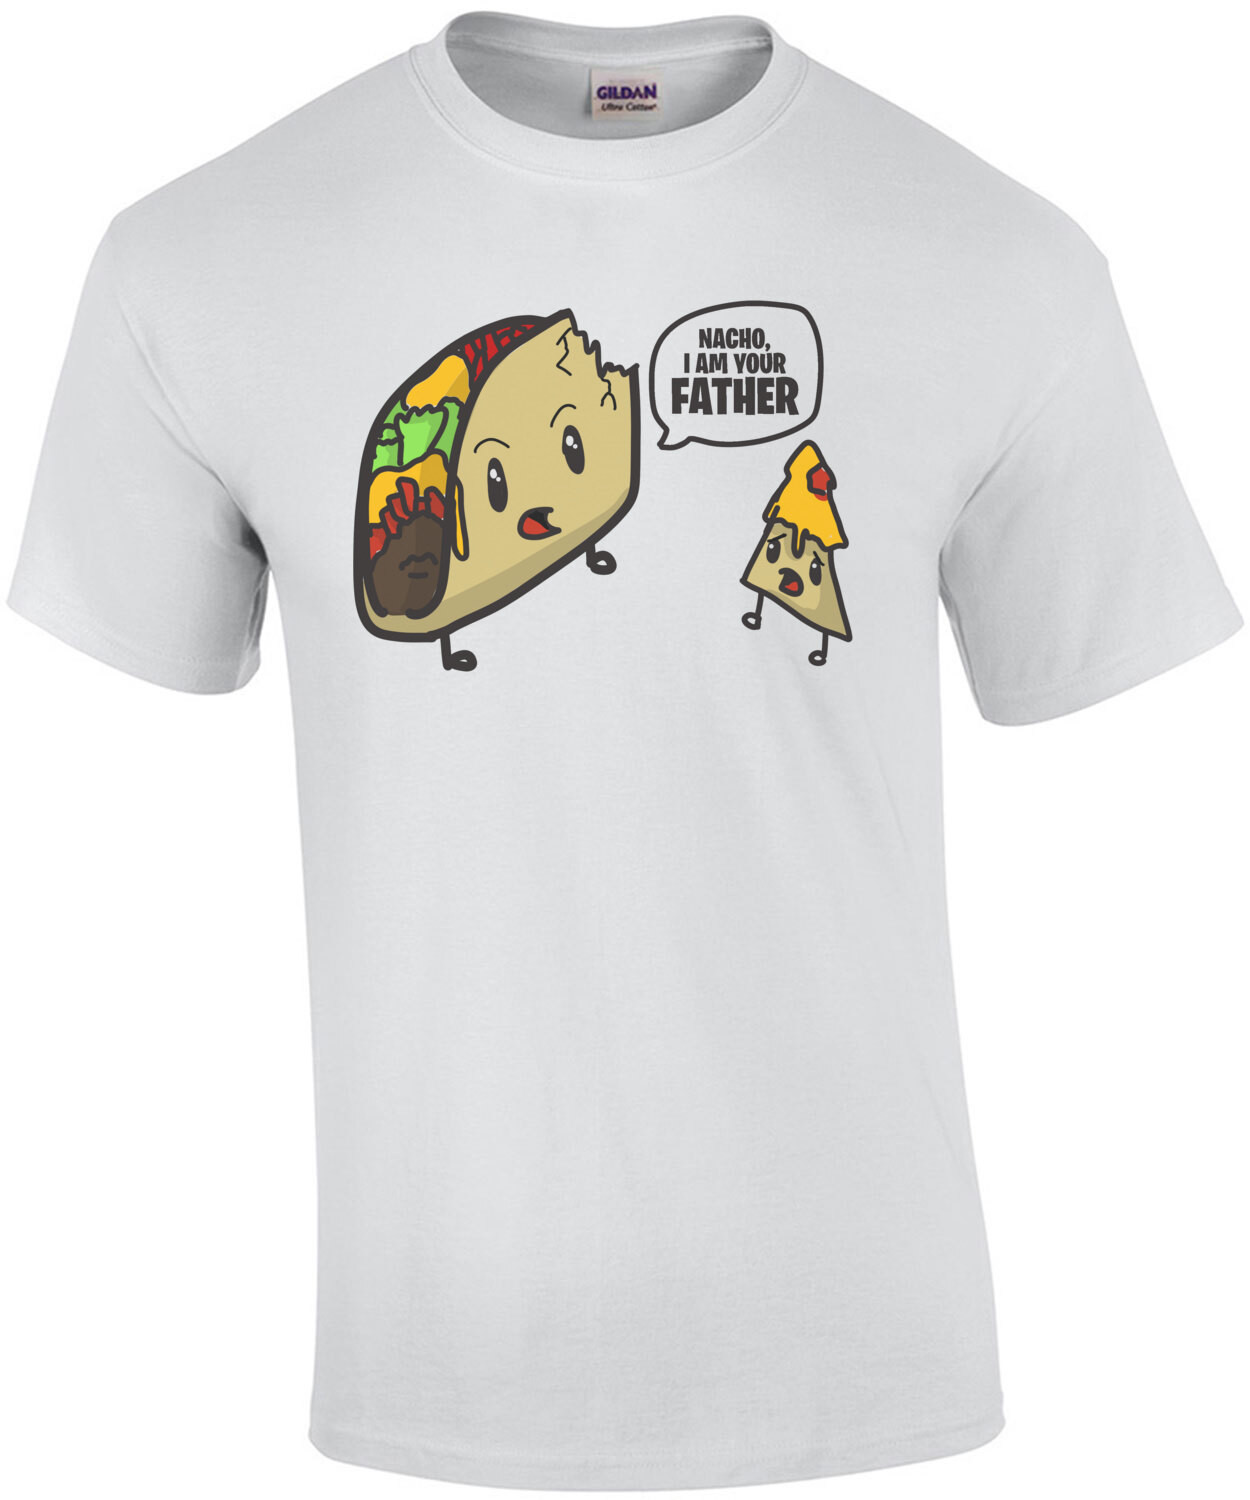 Nacho, I am your father - funny nacho taco t-shirt